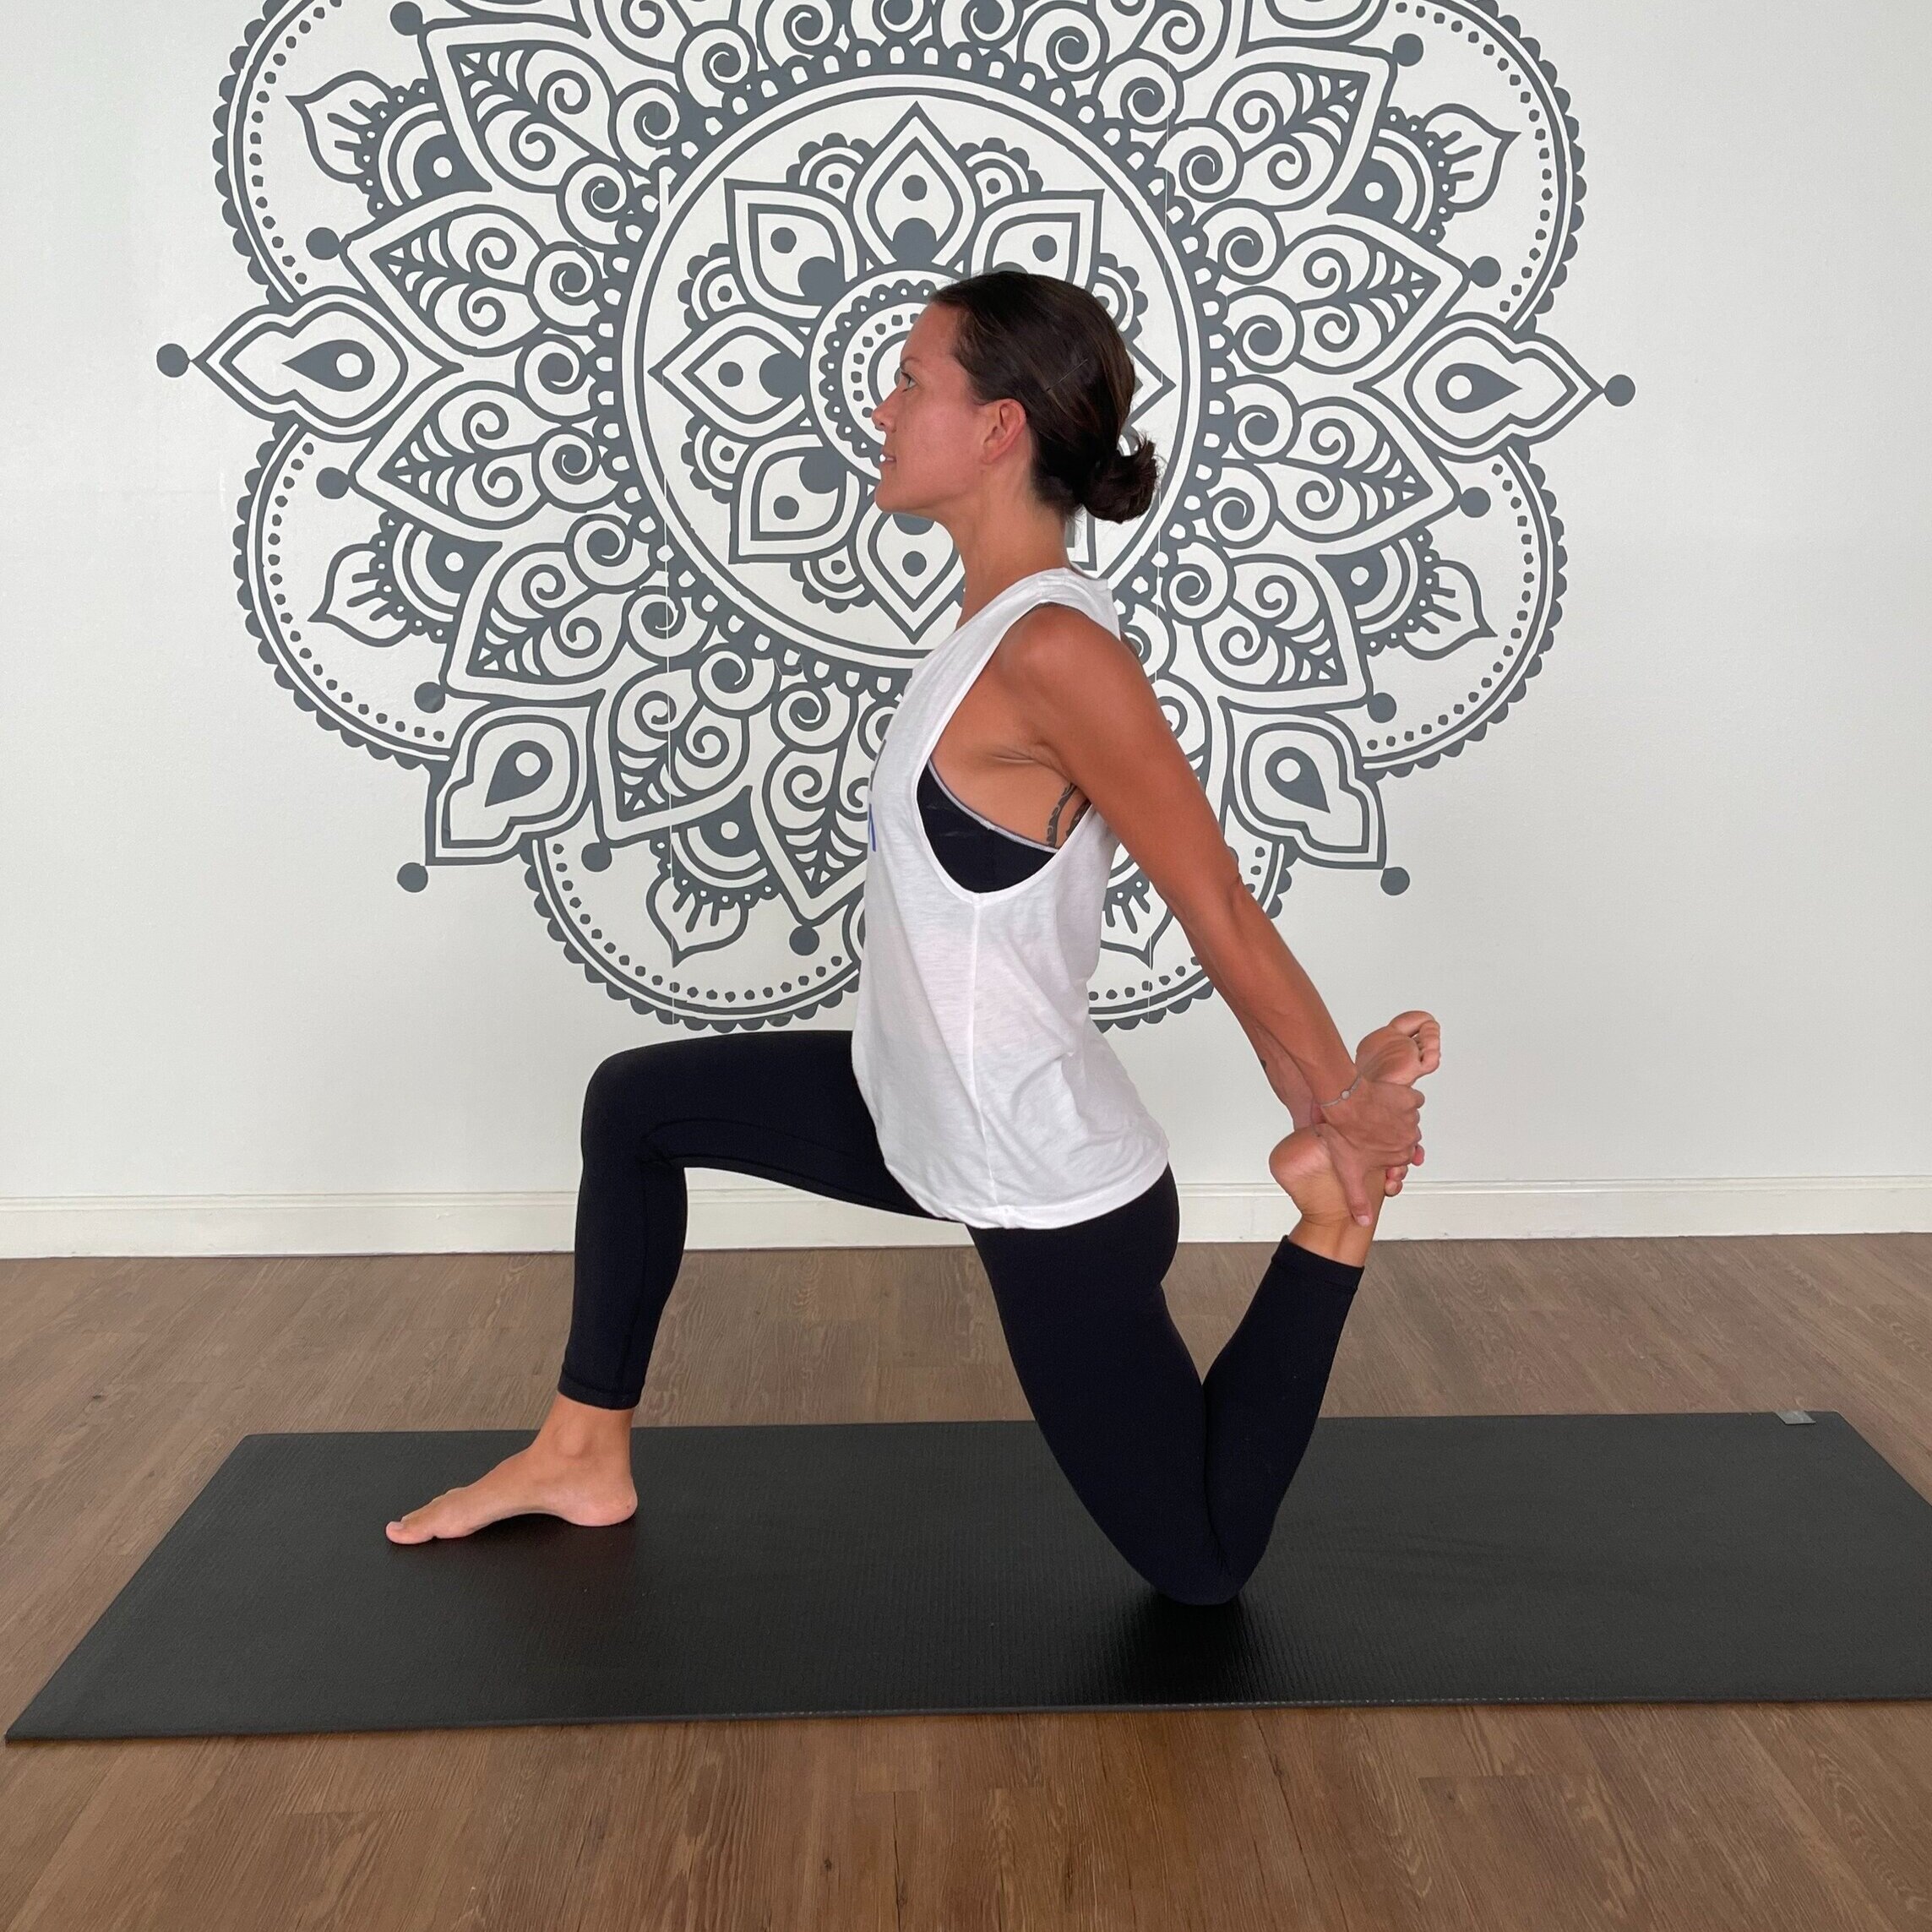 Woman Practicing Yoga, Doing Half Splits Exercise at Yoga Studio, Ardha  Hanumanasana Pose, Working Out, Wearing Sportswear, Black Stock Image -  Image of pose, asana: 173893871